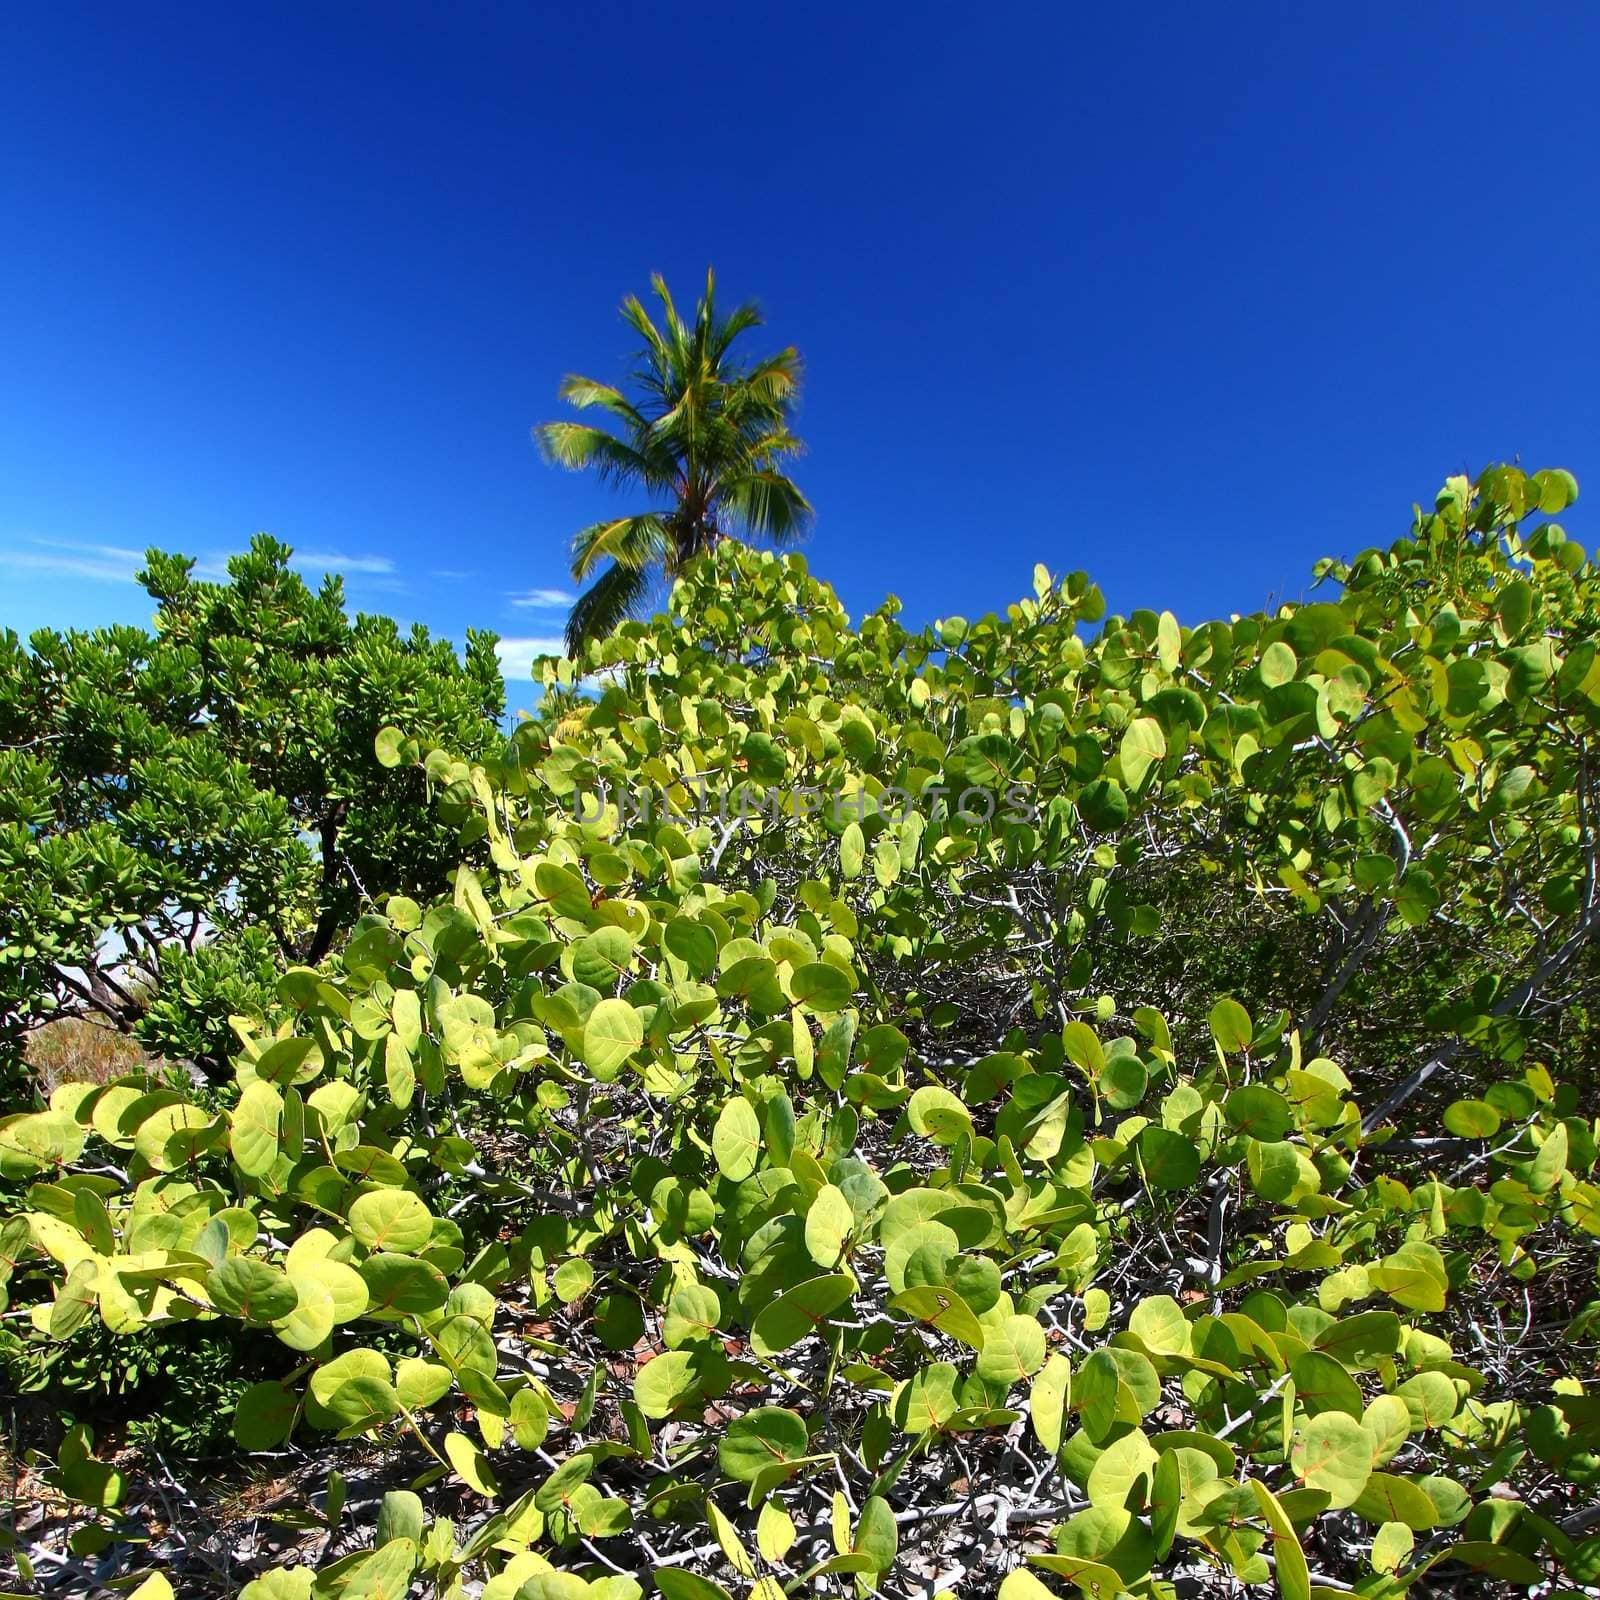 Vegetation grows on Beef Island in the British Virgin Islands.